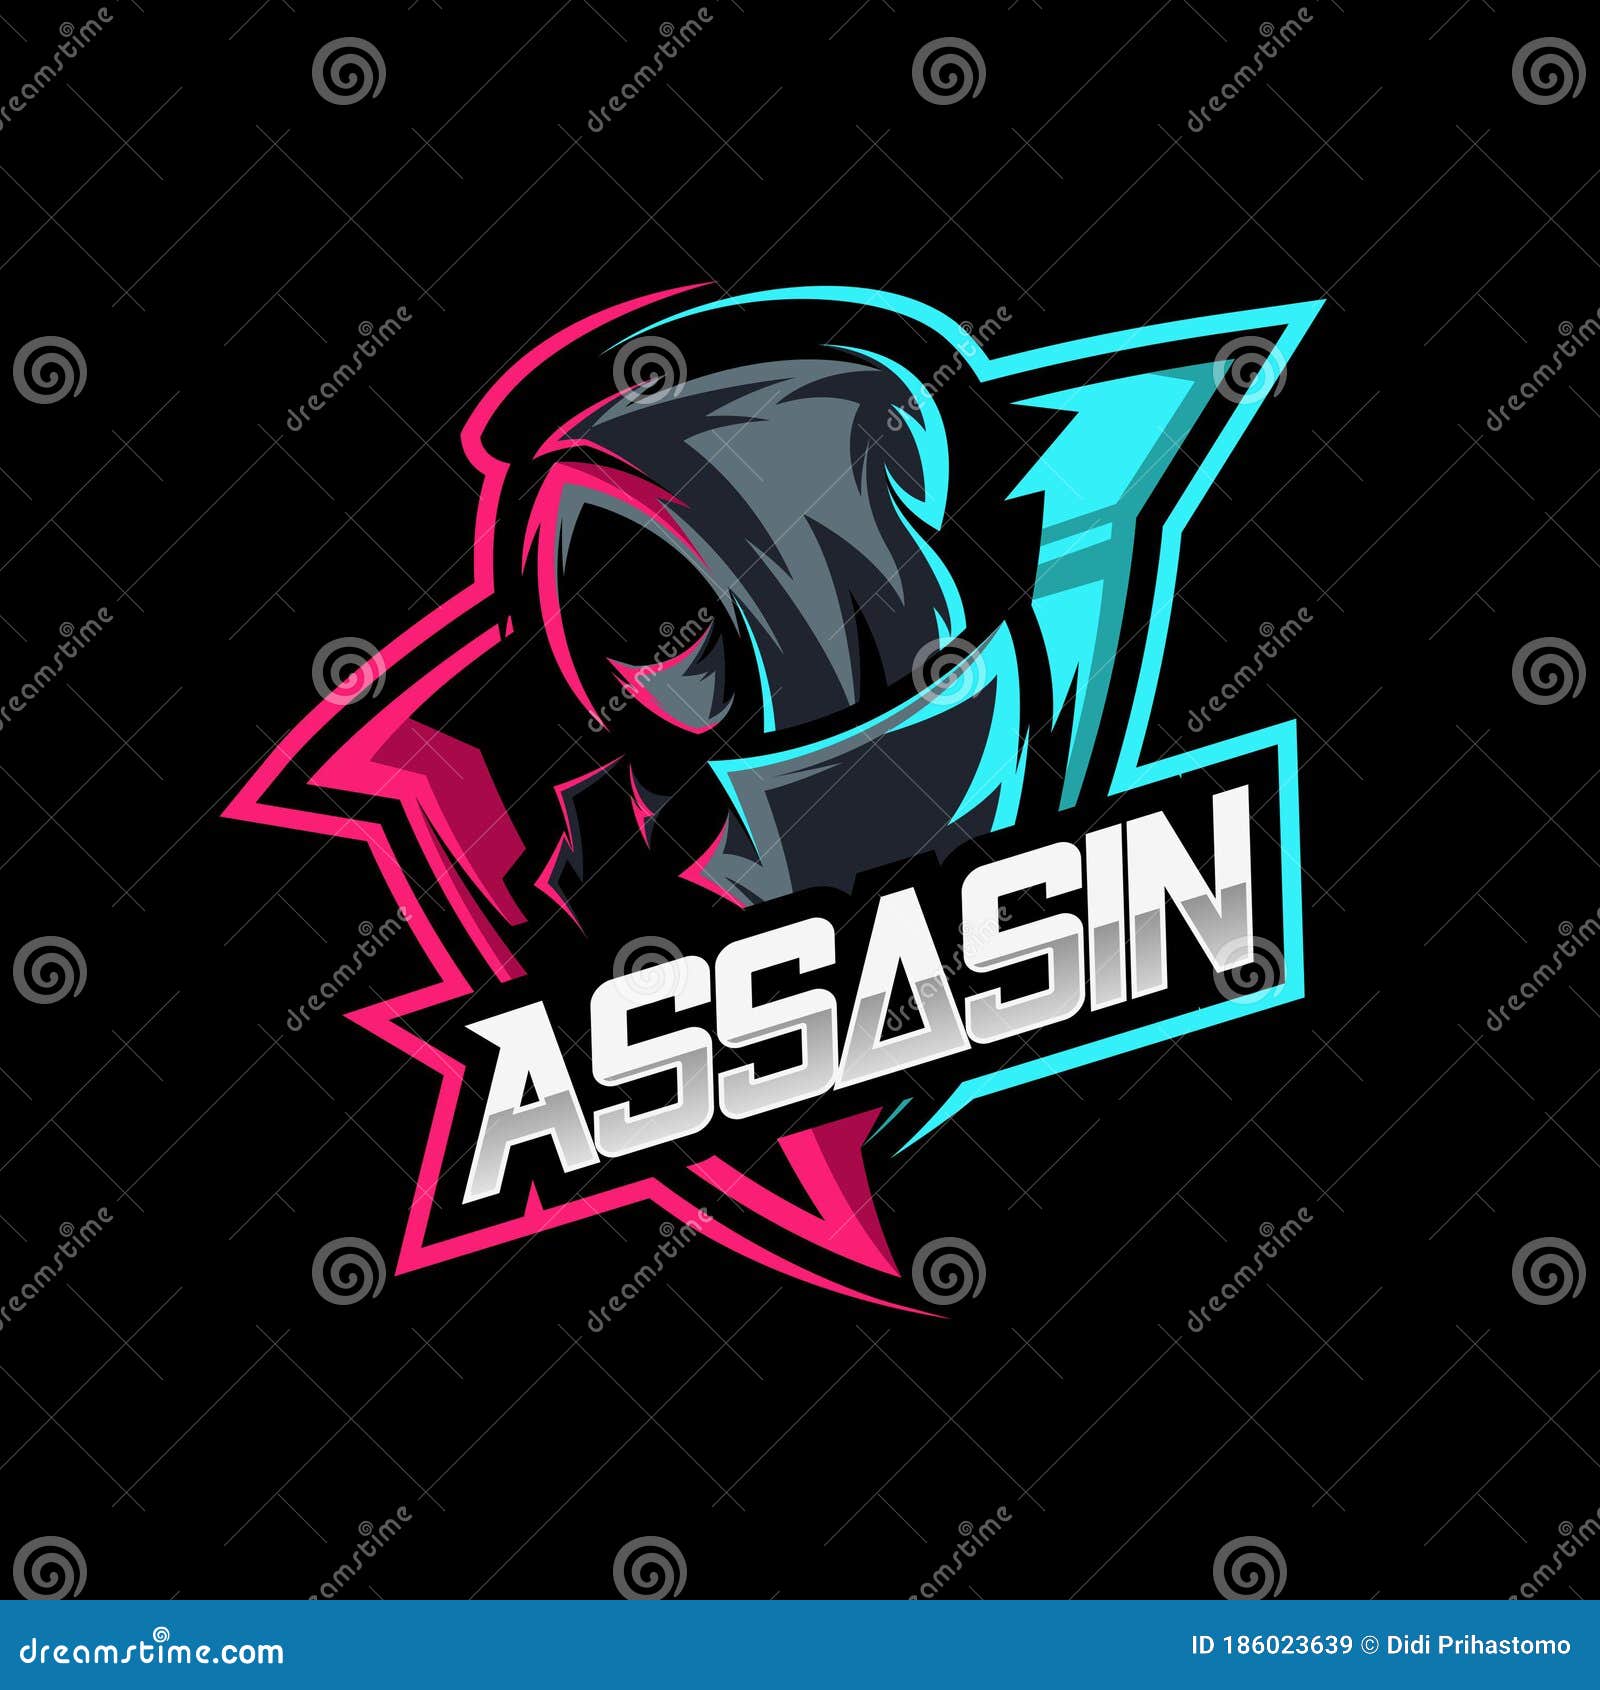 8,292 Assassin Logo Images, Stock Photos, 3D objects, & Vectors